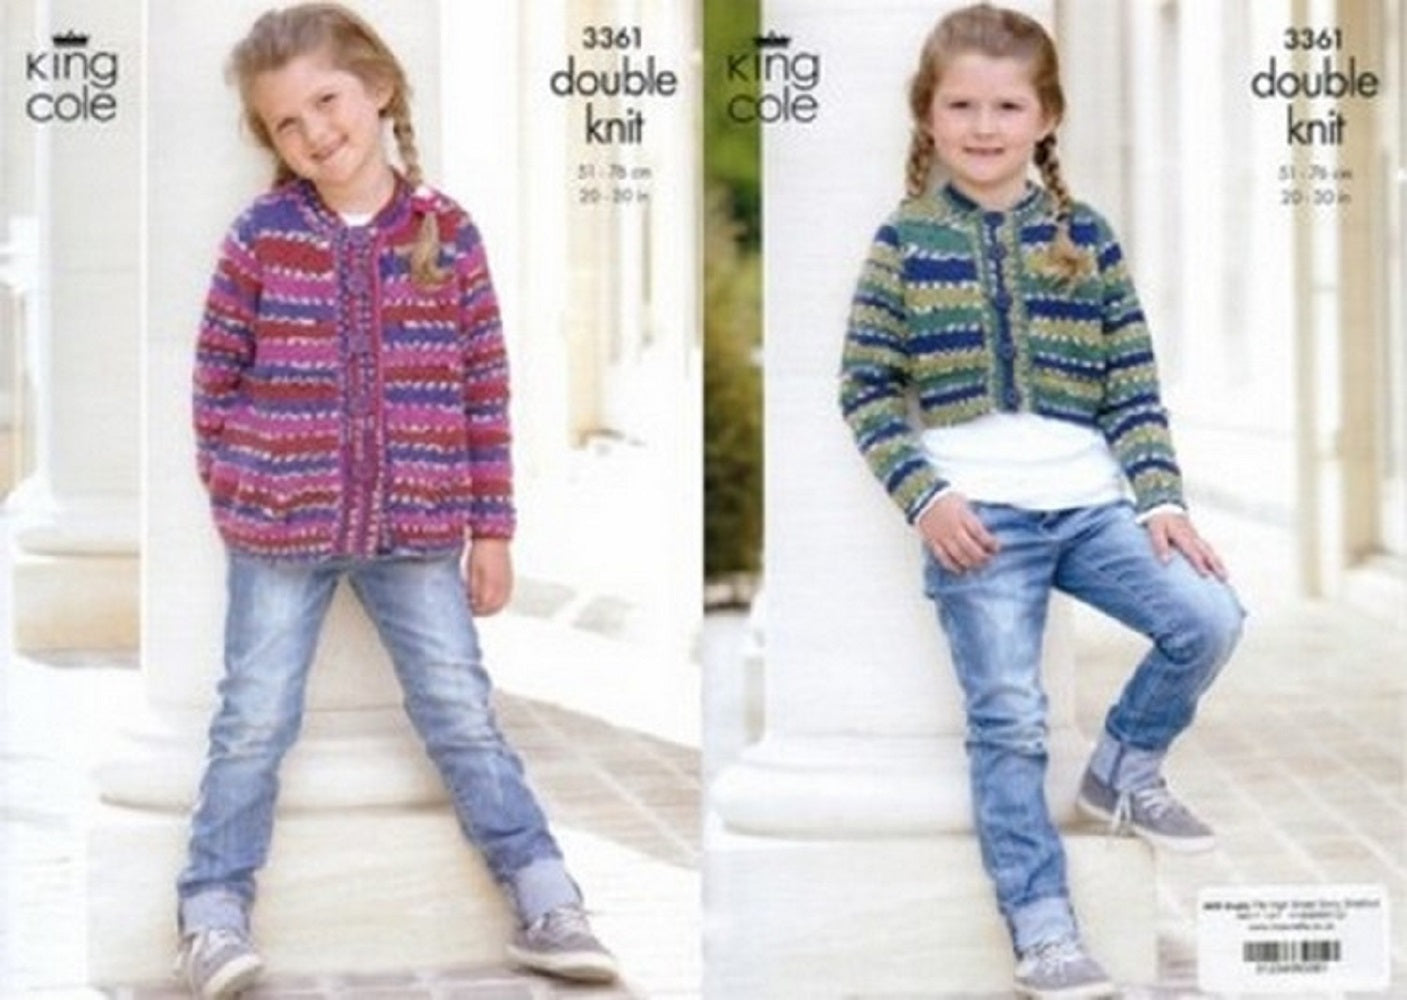 King Cole 3361 DK Childs Cardigan Knitting Pattern